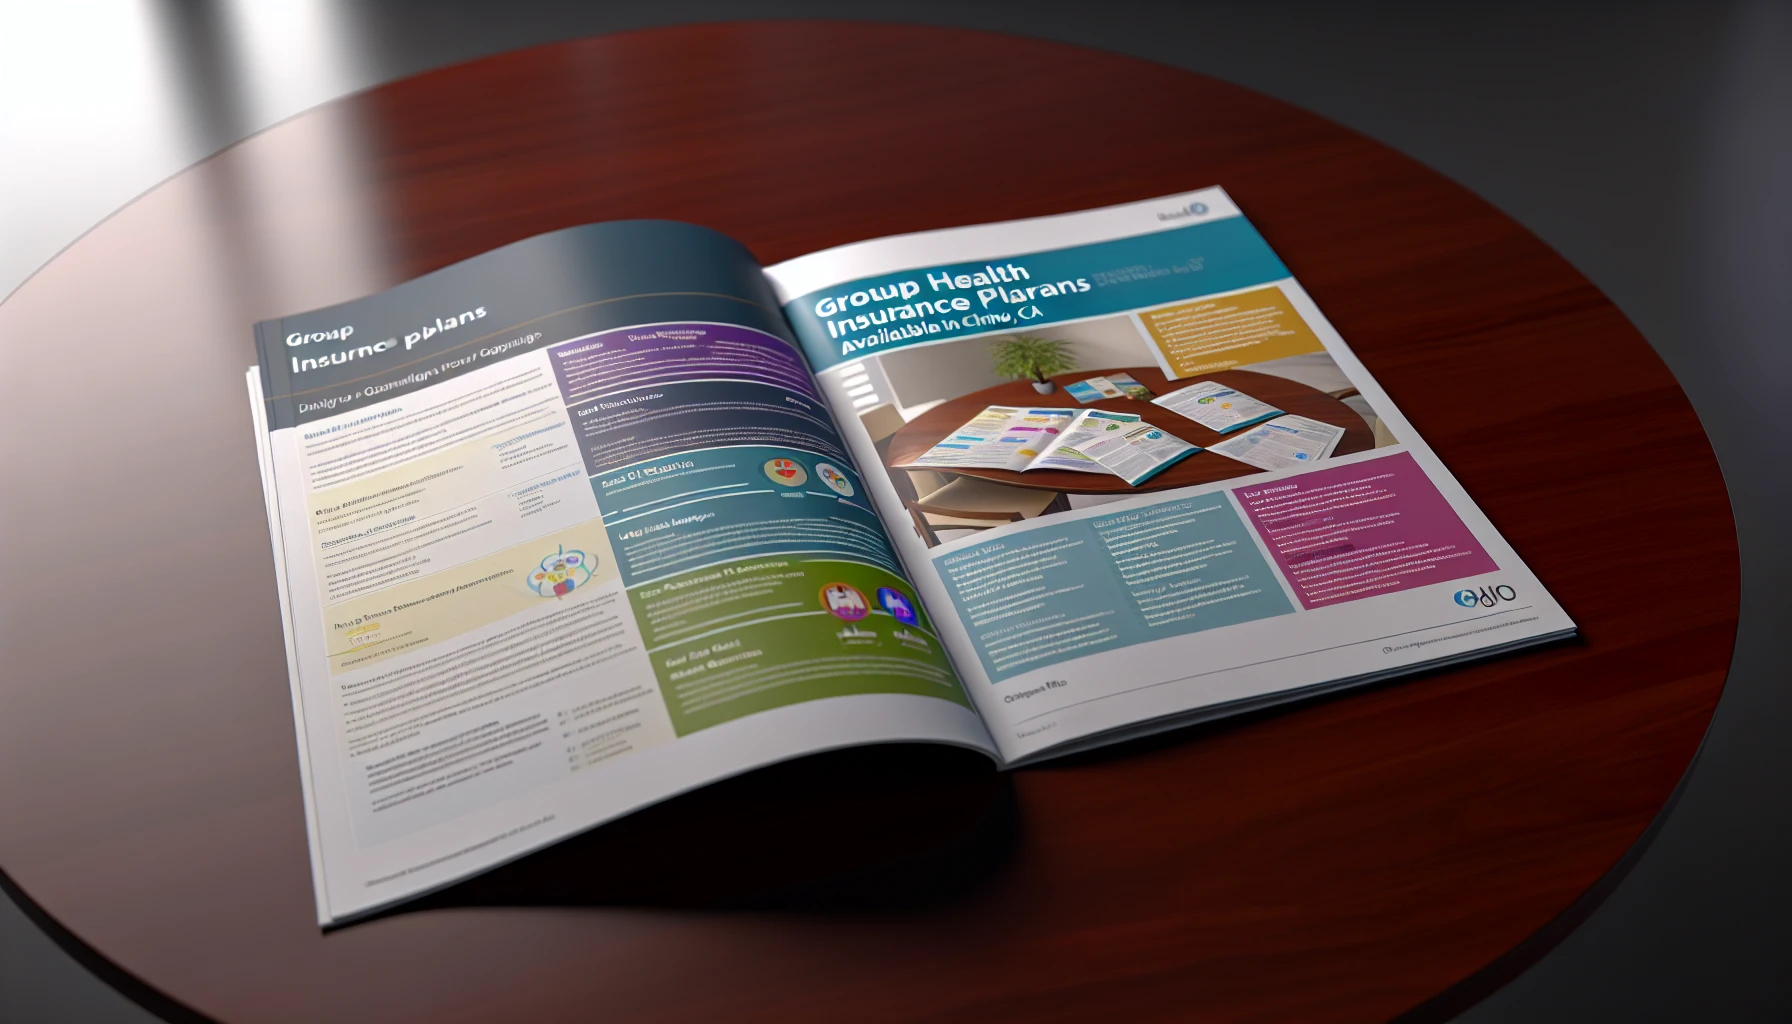 Group health insurance plan brochure